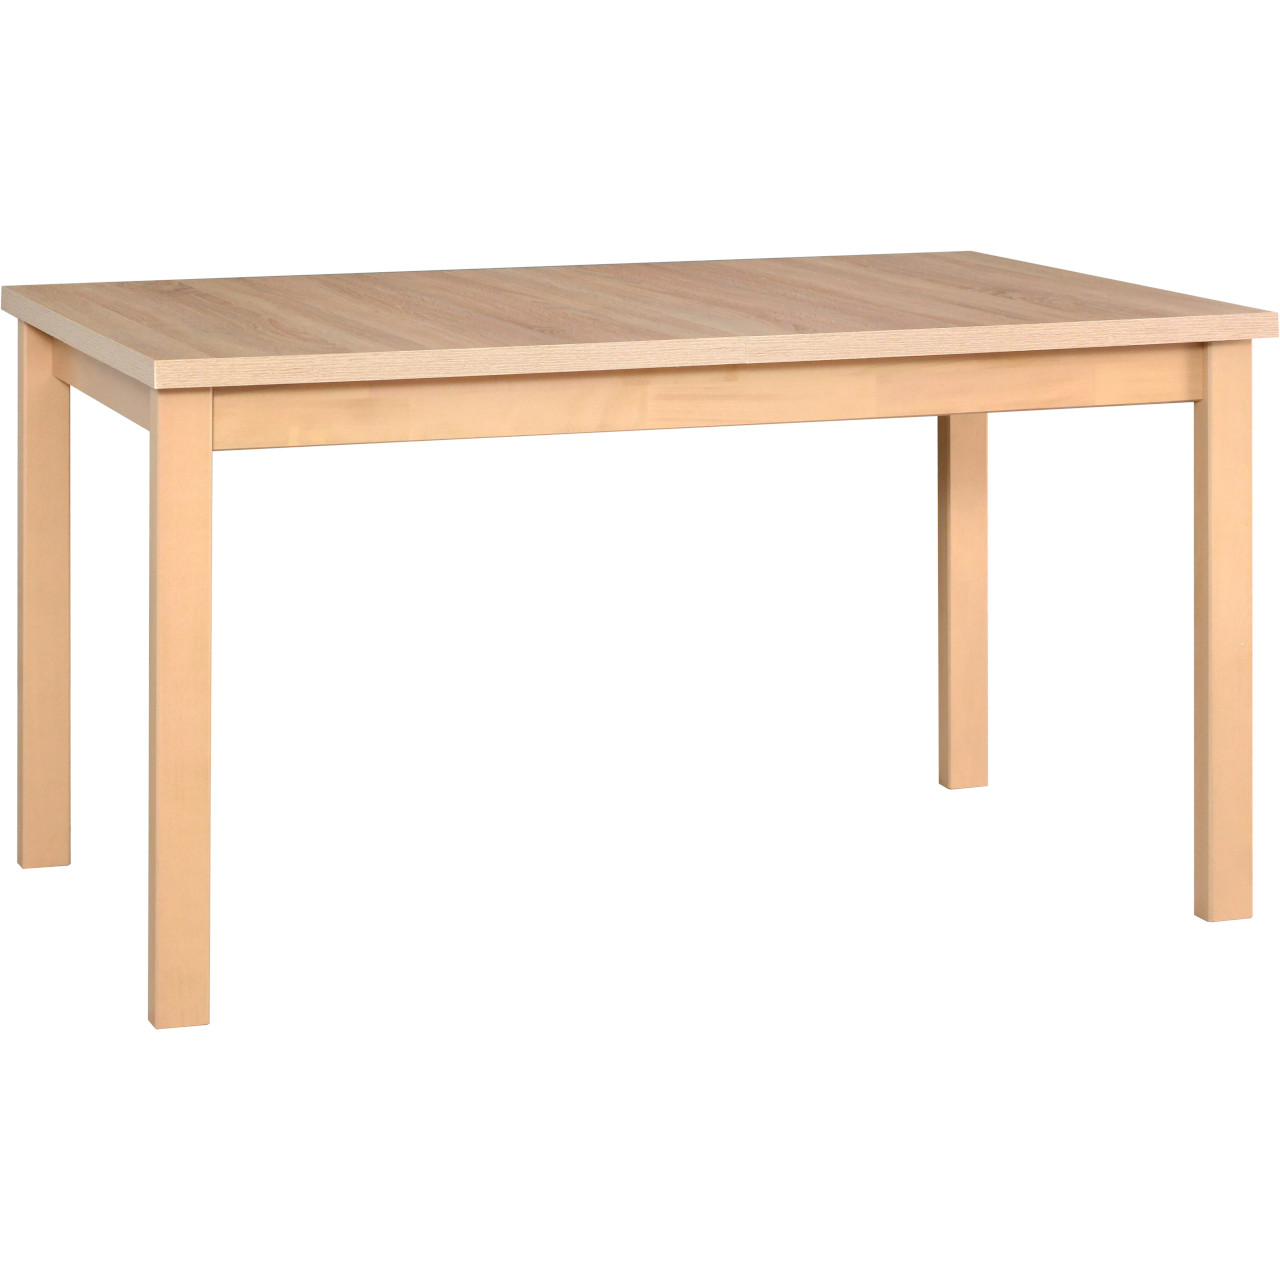 Table ALBA 2 80x140/180 sonoma laminate